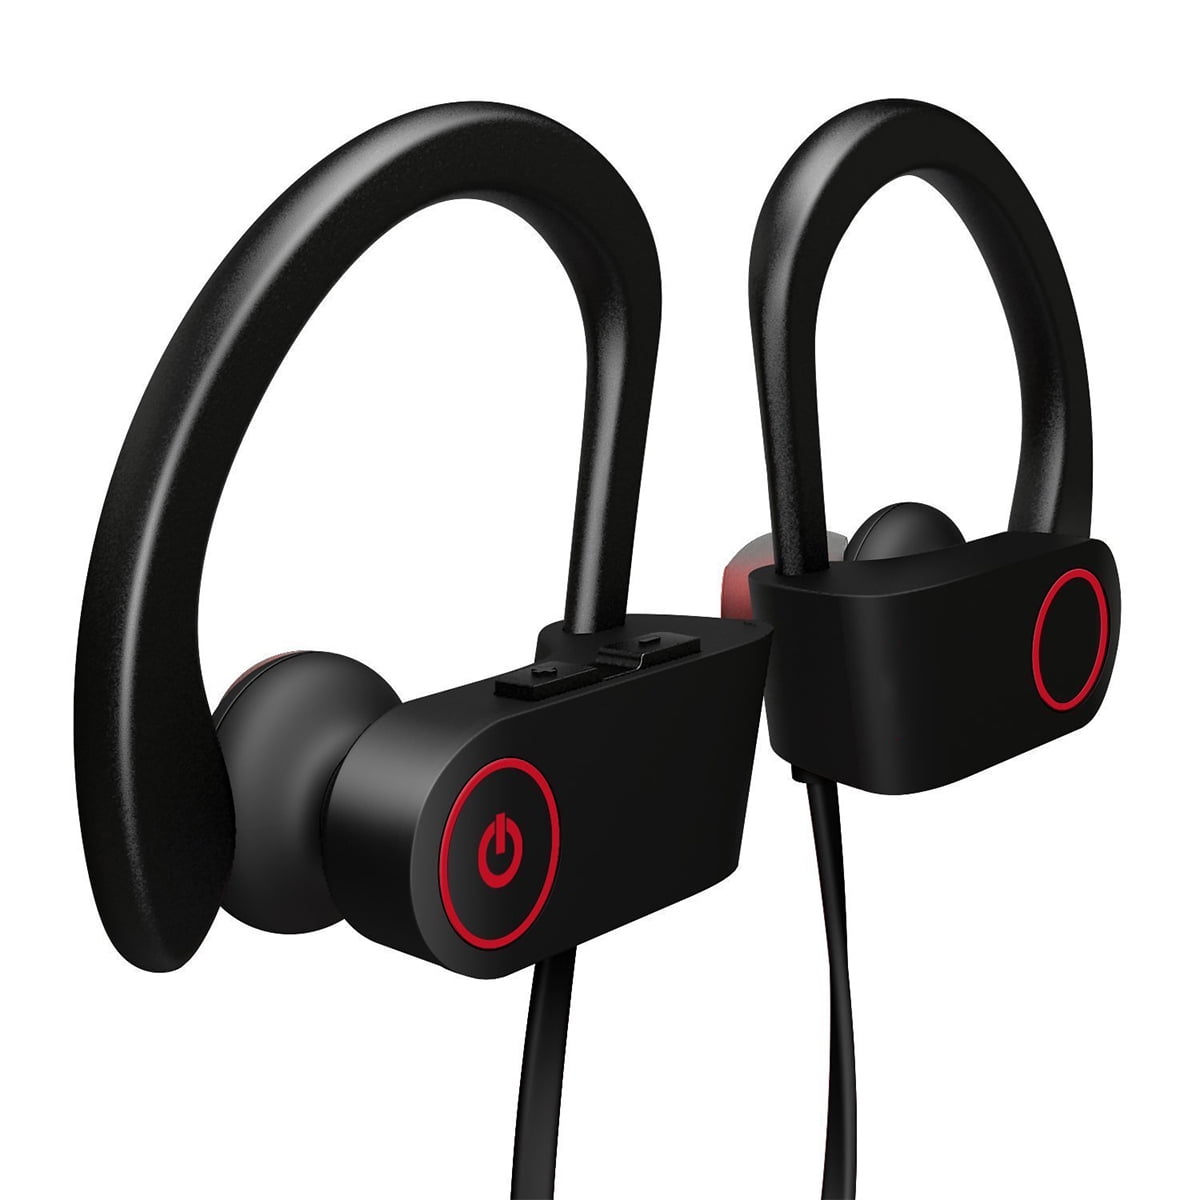 Bluetooth Headphones,Ecandy Sport Wireless Headsets Earbuds In-Ear Stereo Earphones with Mic,Noise Cancelling Green Sweatproof 